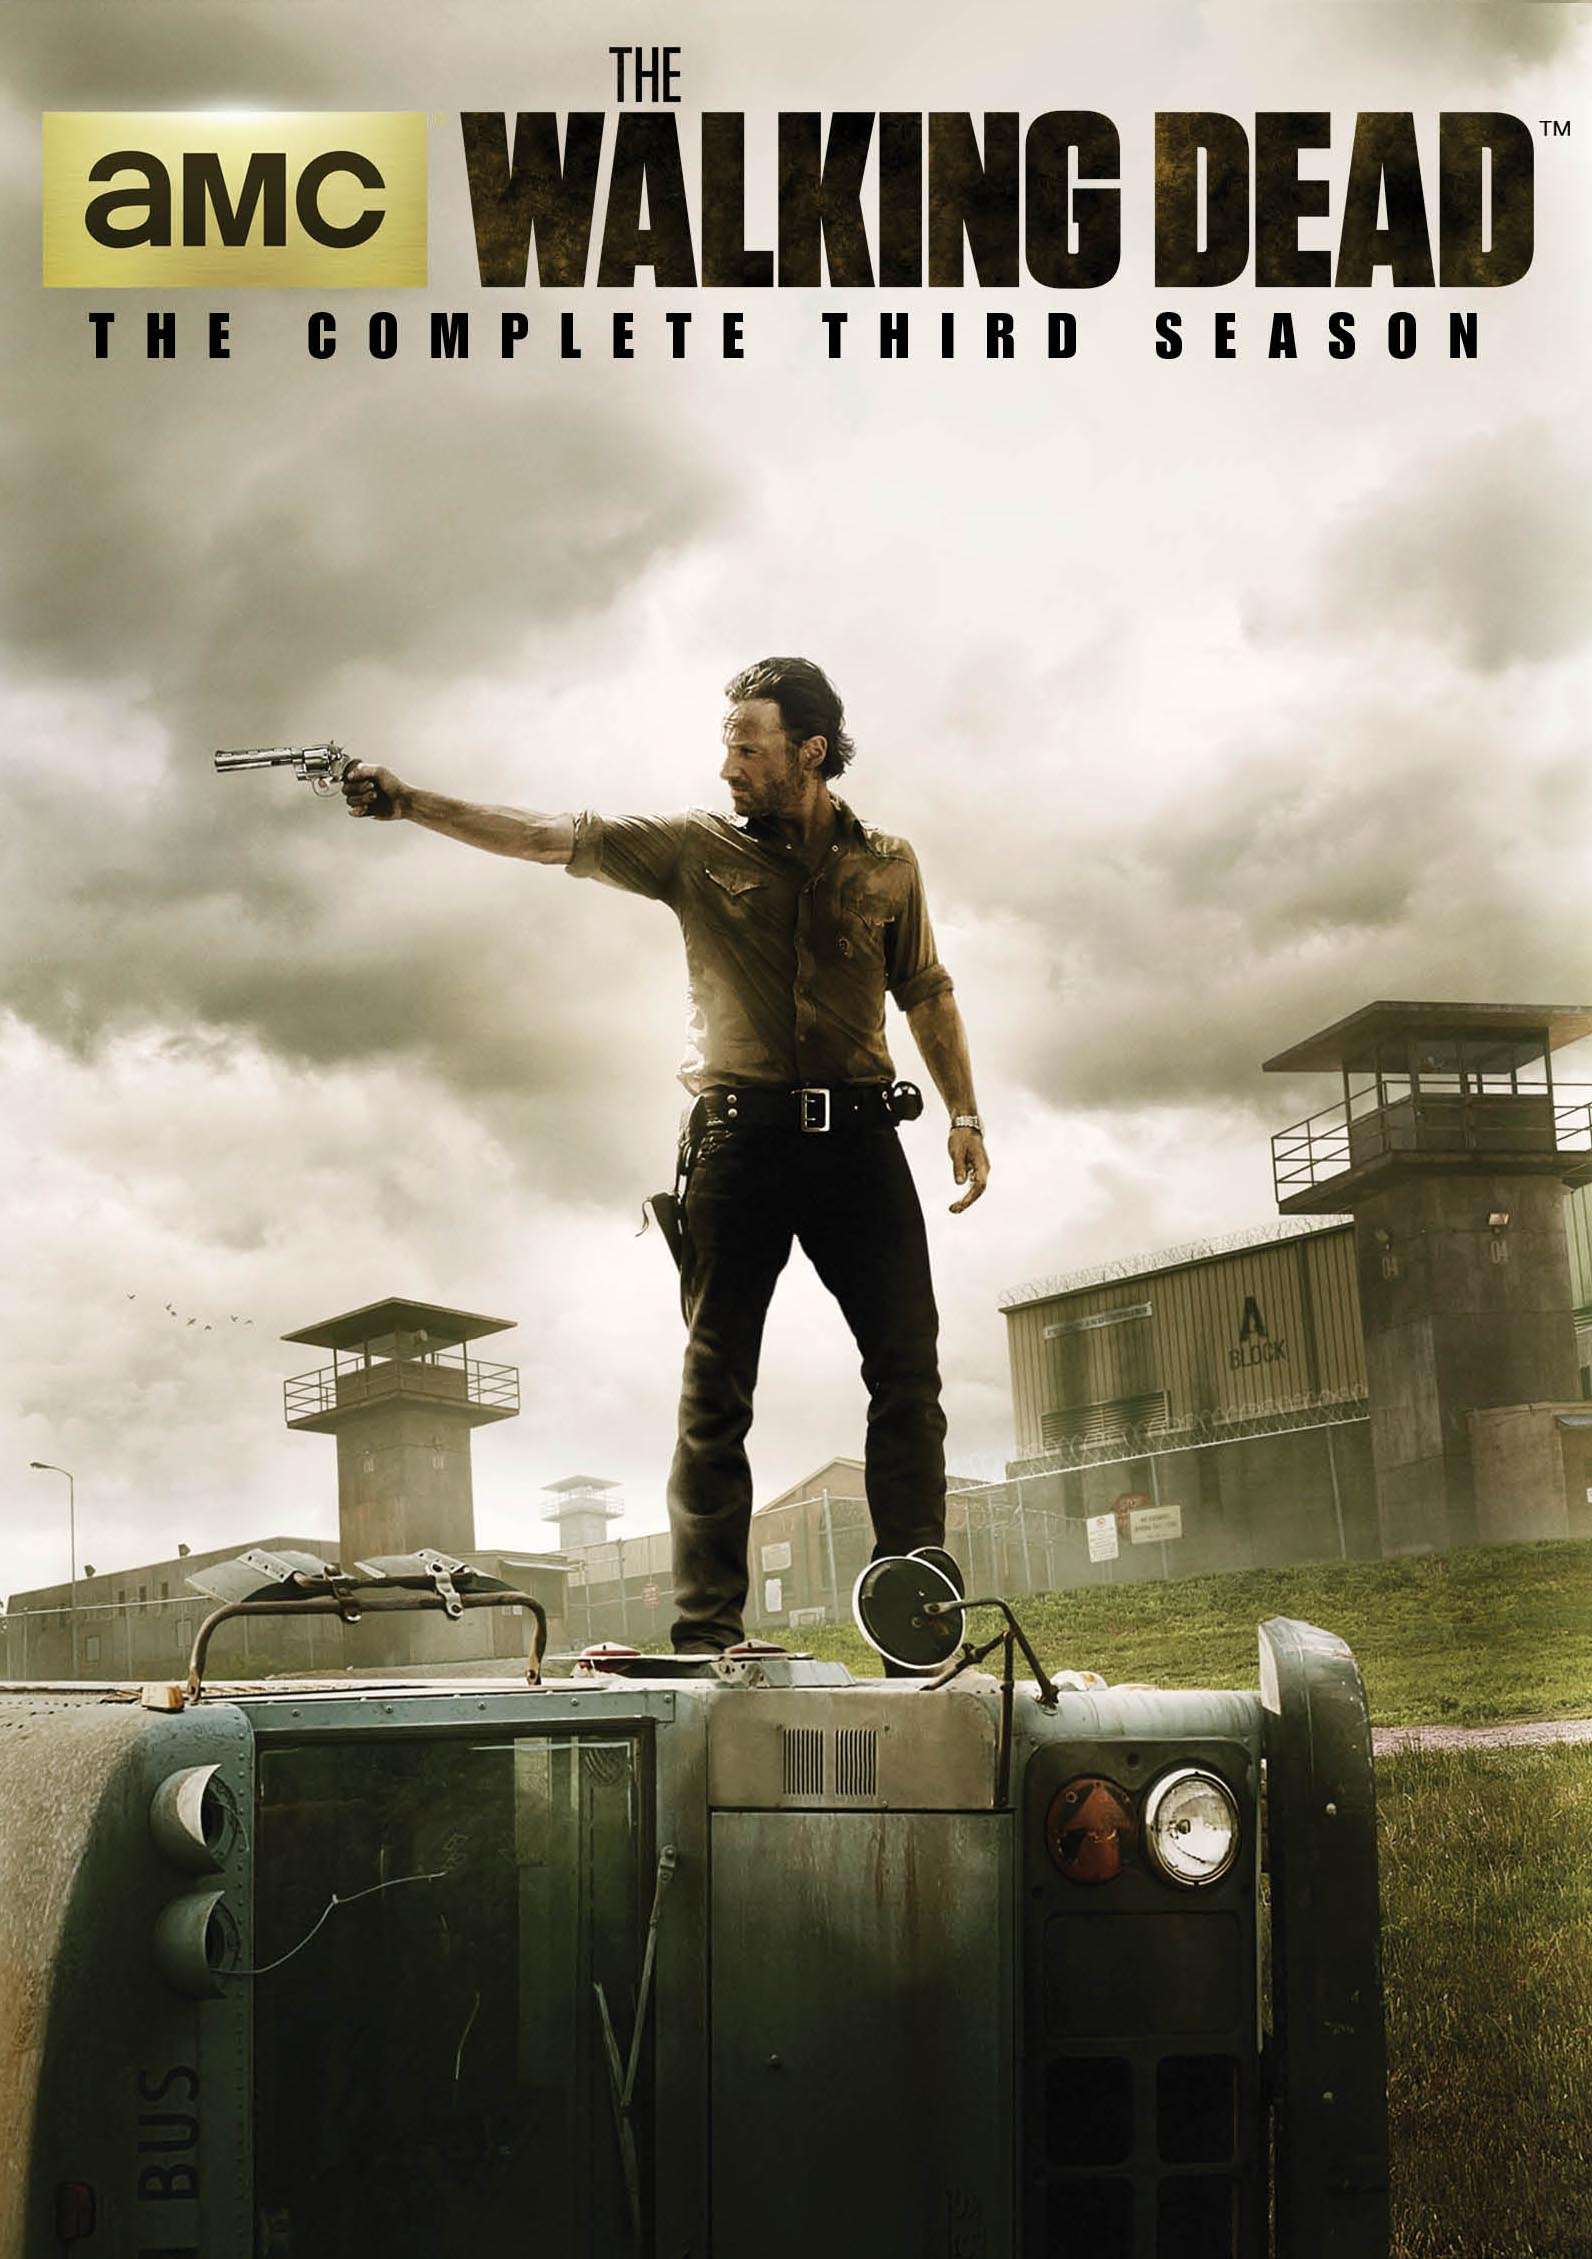 The Walking Dead S08E01 English HDTV 720p